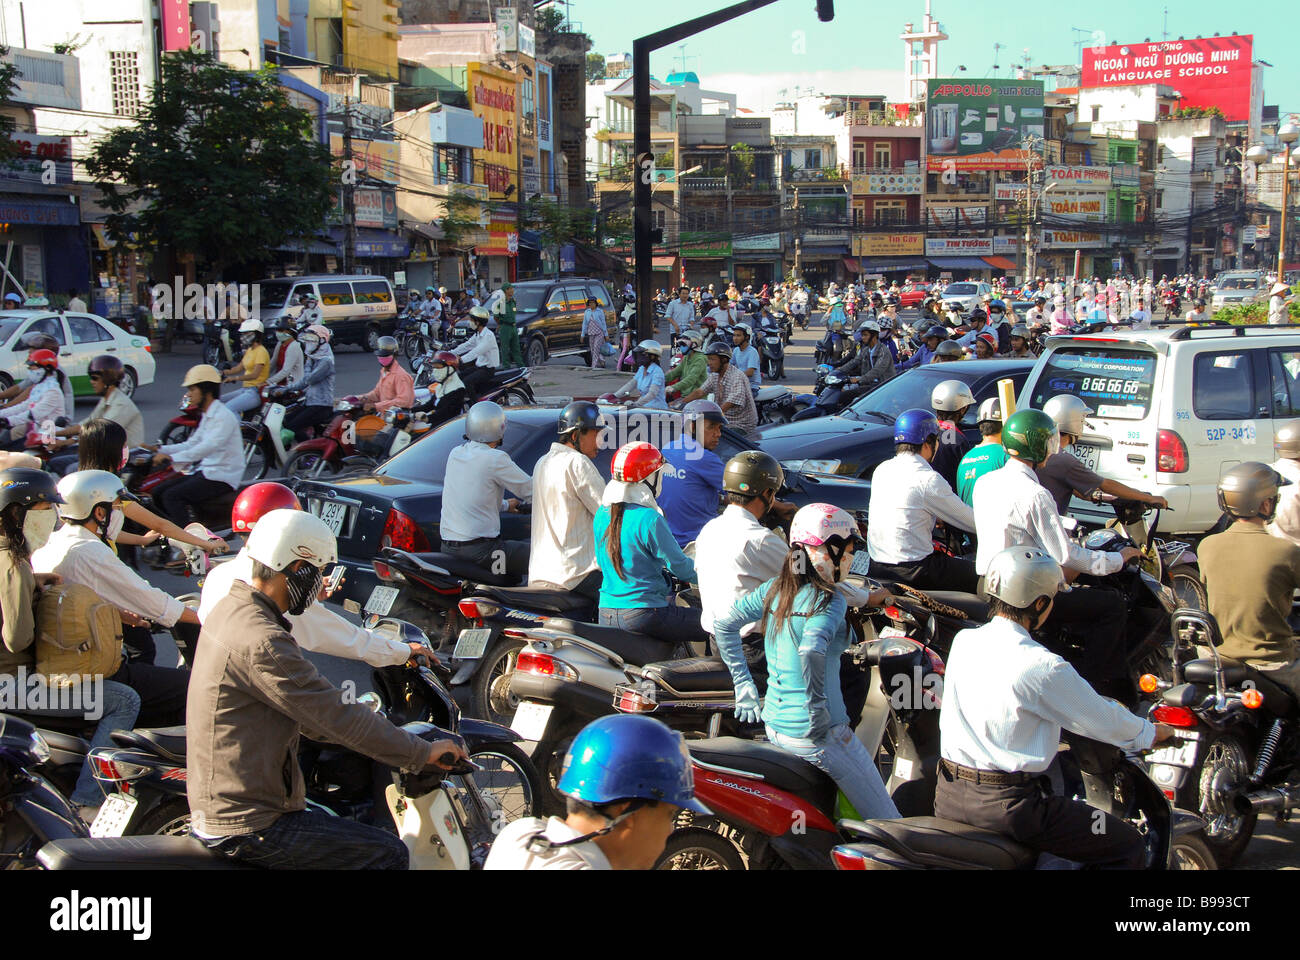 Hanoi'ing traffic, Vietnam. : r/WTF